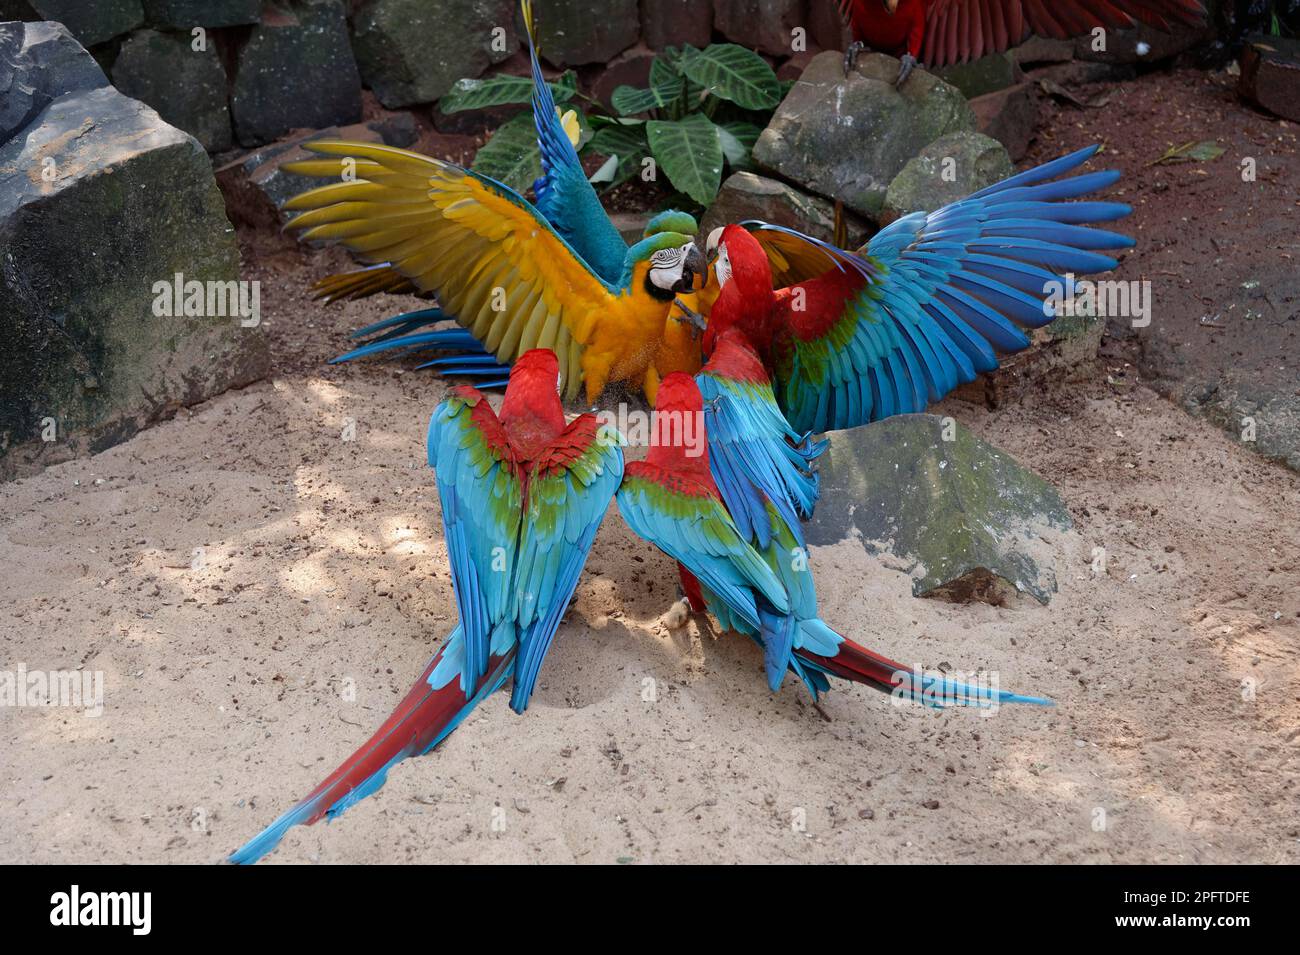 Lotta contro macaw rosso-verde blu e giallo (macaw rosso-verde Ara (Chloropterus) e macaws blu-giallo, Iguazu National Park, Parana state Foto Stock